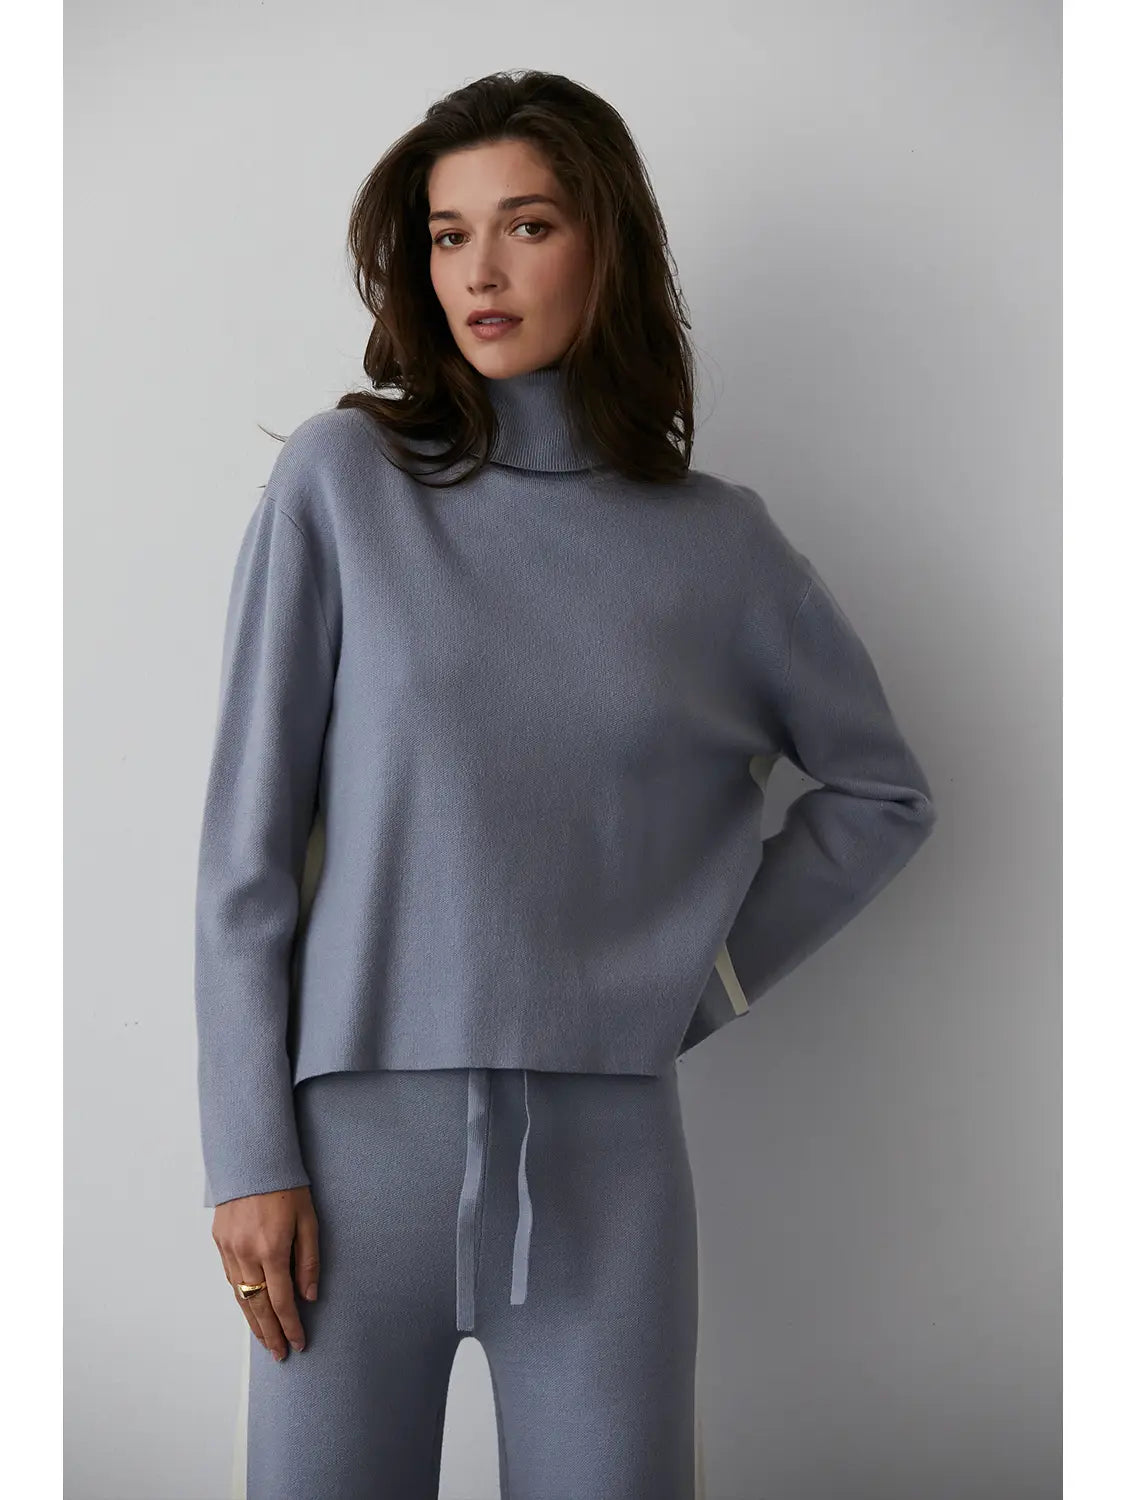 Sage Turtleneck Sweater Set